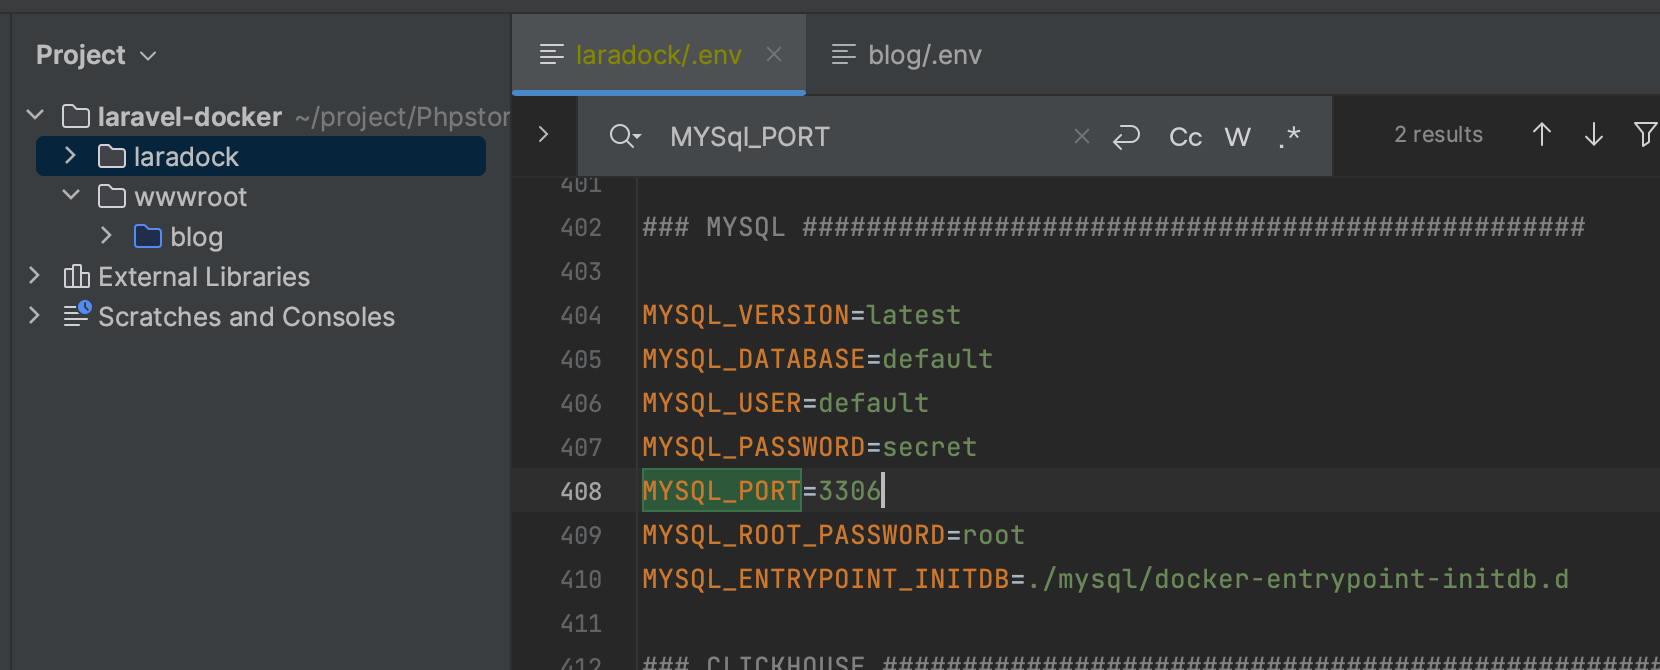 laradock 中的mysql 失败，错误原因 RROR 1045 (28000): Access denied for user 'root'@'localhost' (using password: YES)